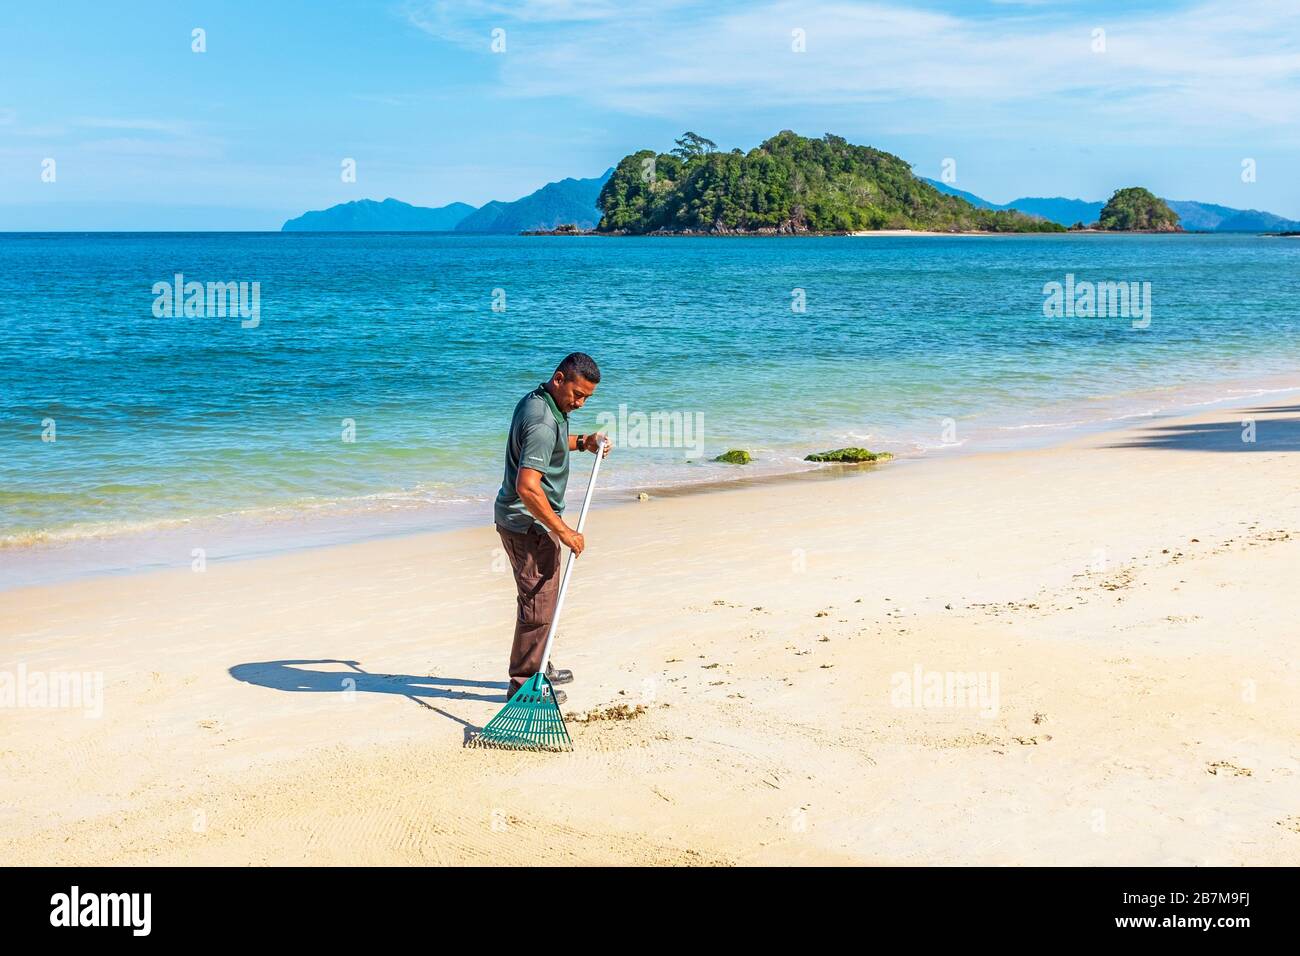 Man raking and cleaning the beach at Andaman, Langkawi, Malaysia, Asia Stock Photo